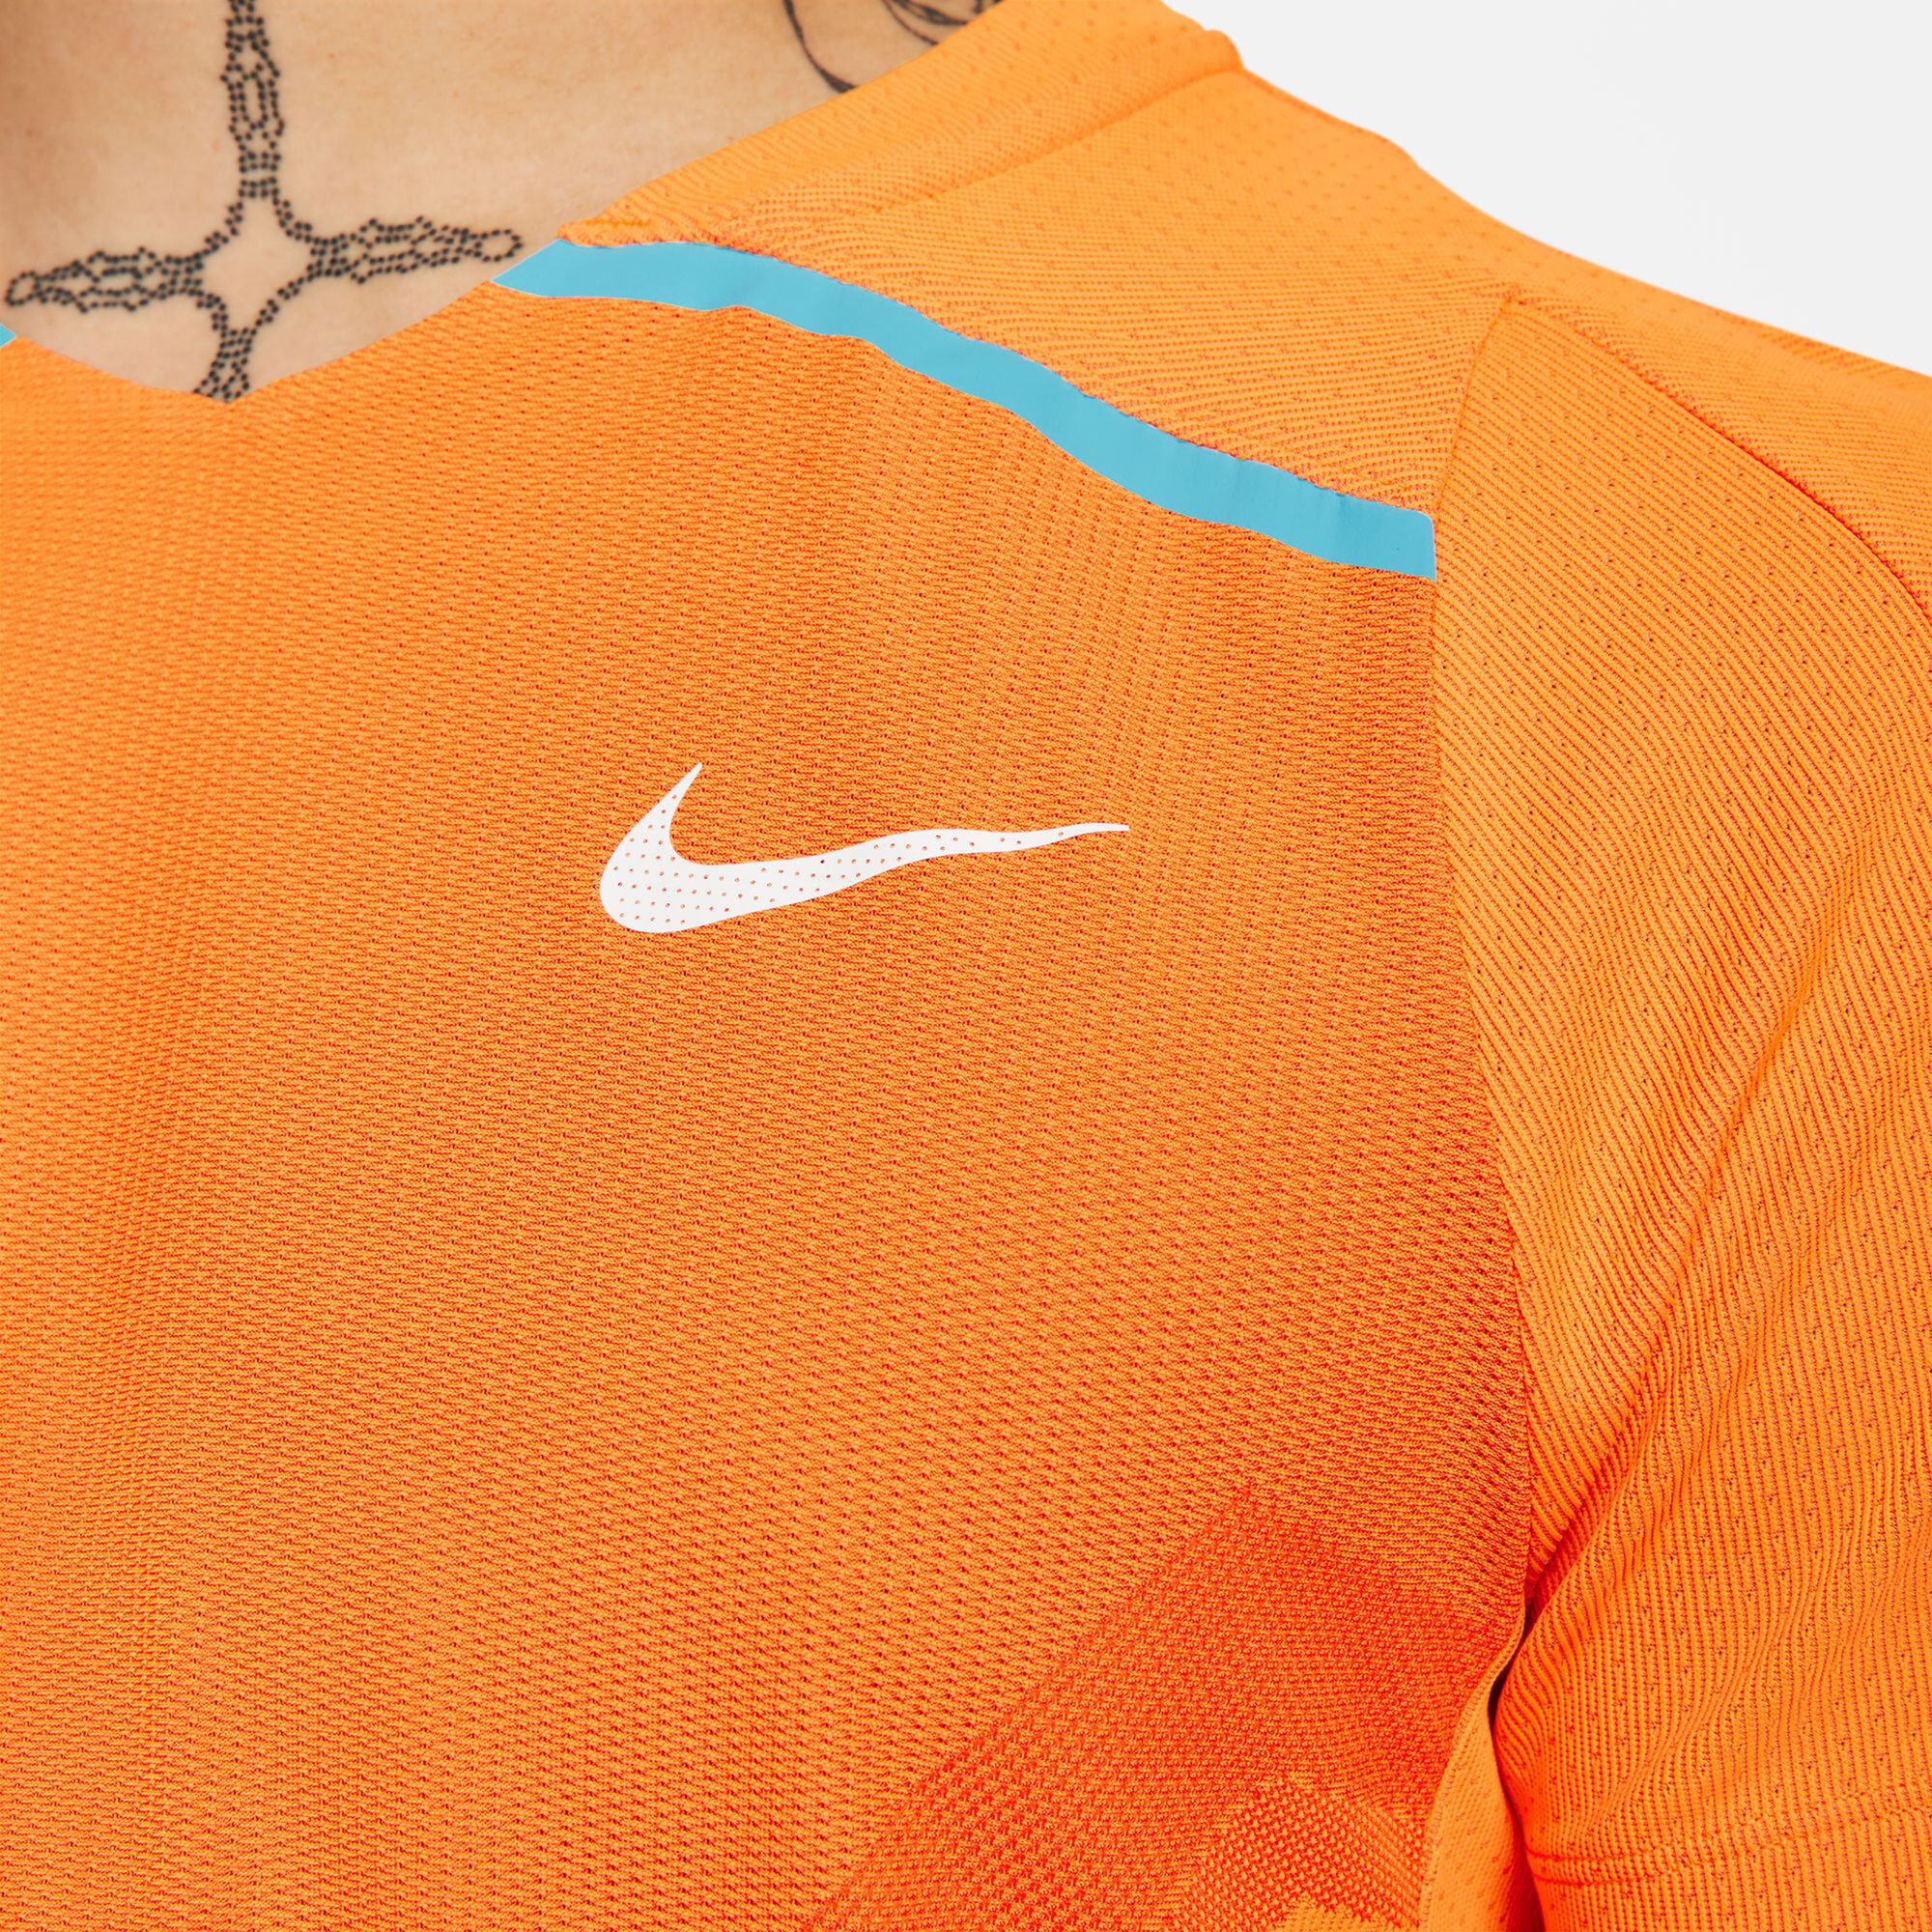 Buy Nike Dri-Fit Advantage RAFA Court T-Shirt Men Orange online